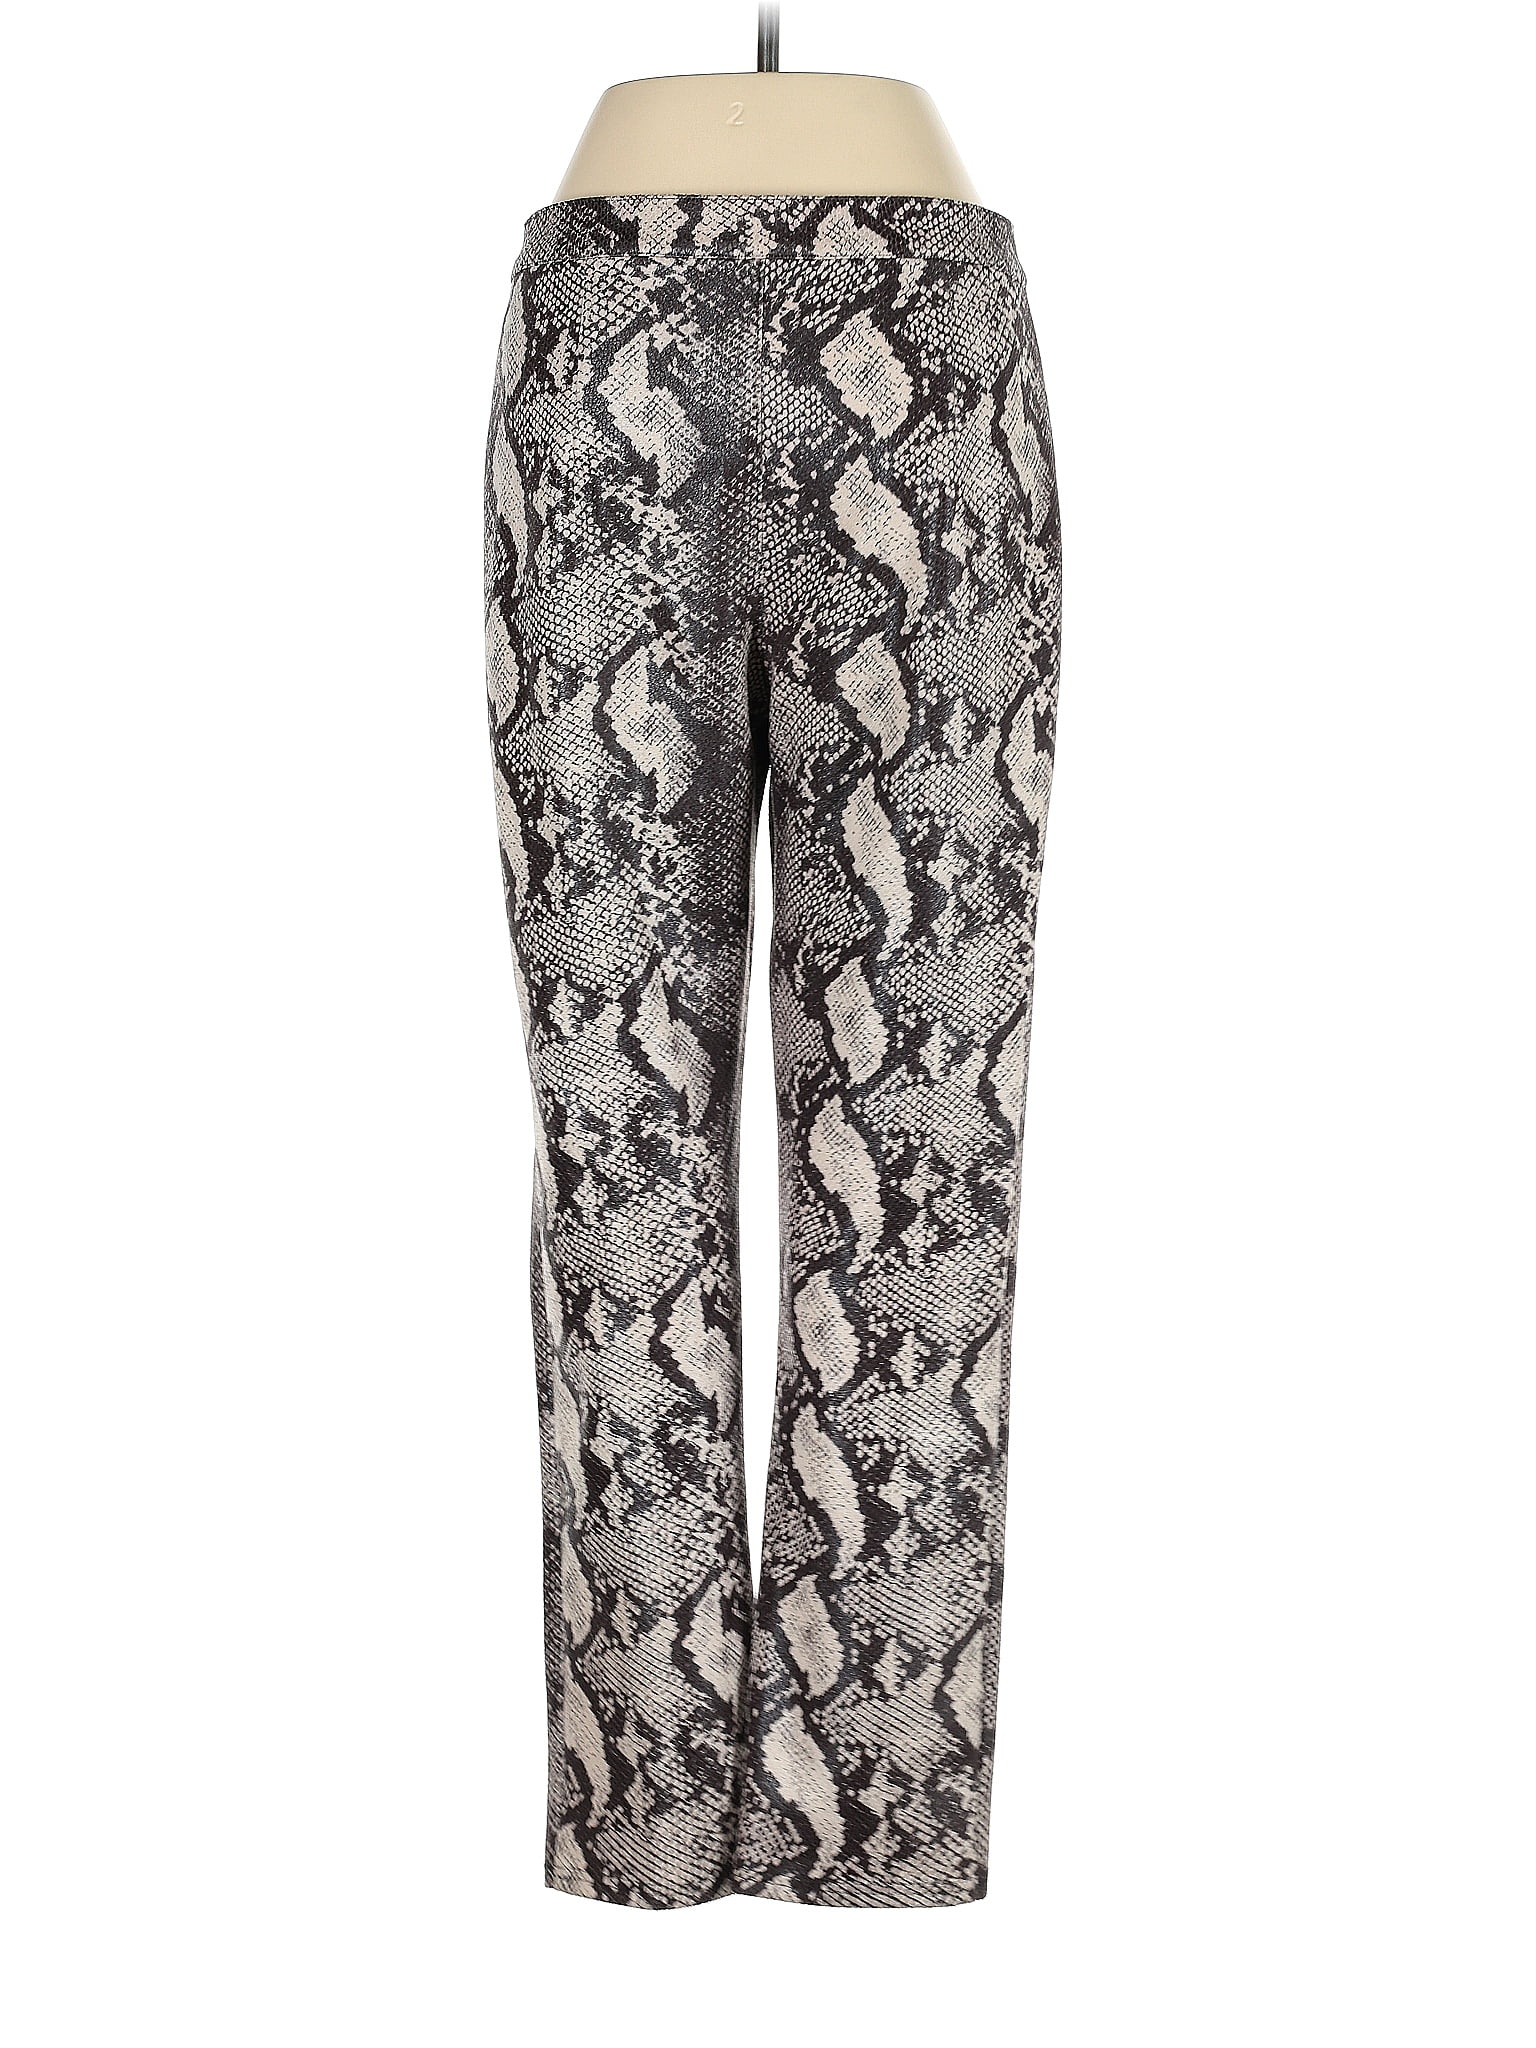 Lululemon Athletica Snake Print Gray Active Pants Size 6 - 51% off